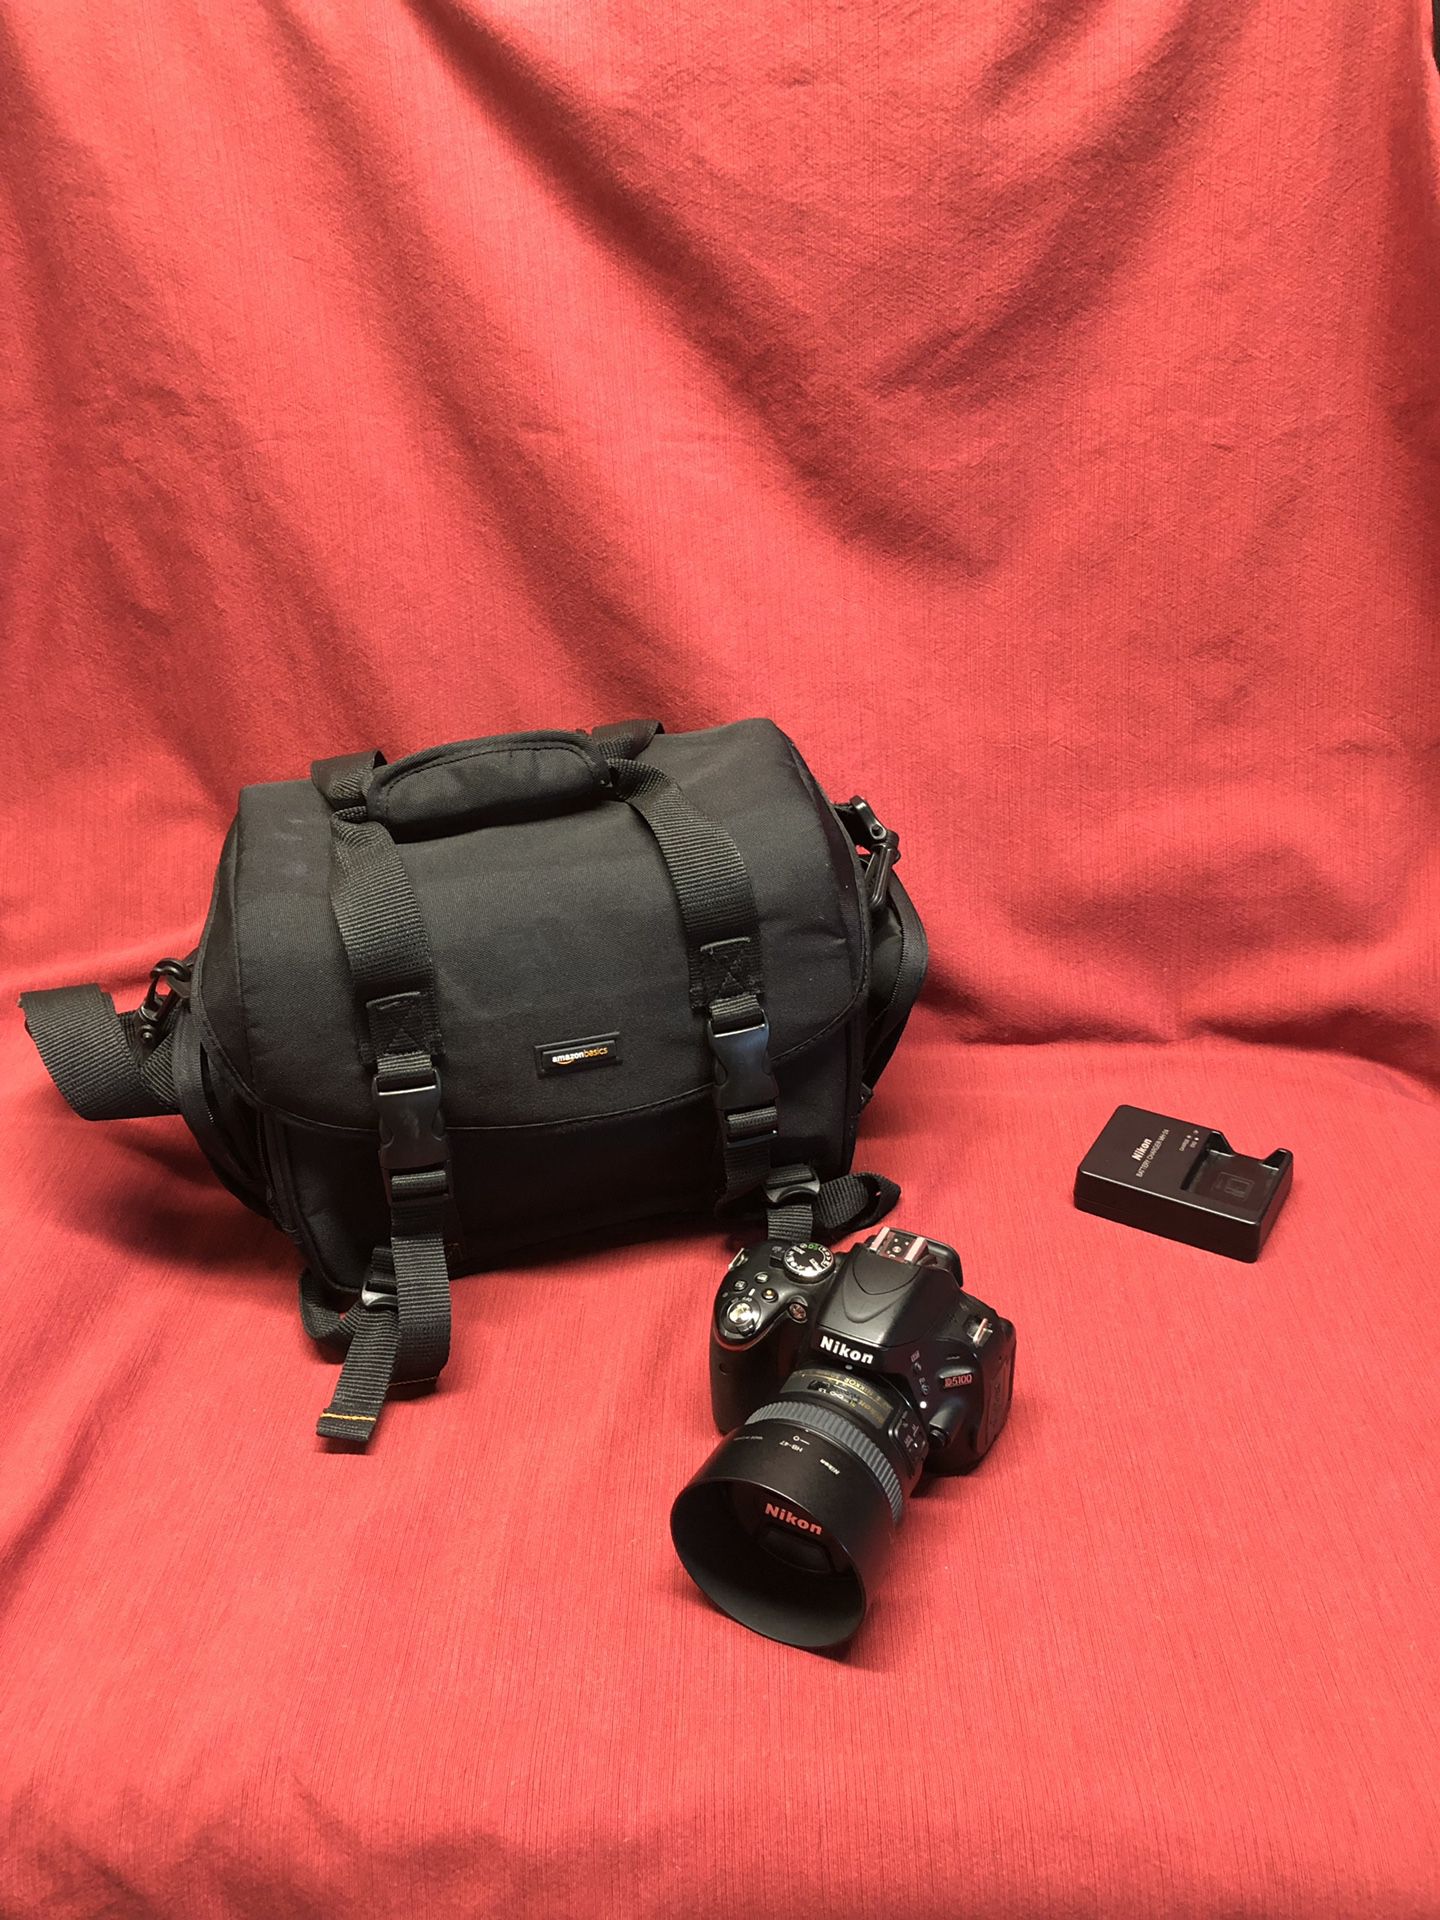 Nikon D5100 with 1.8/50mm lense